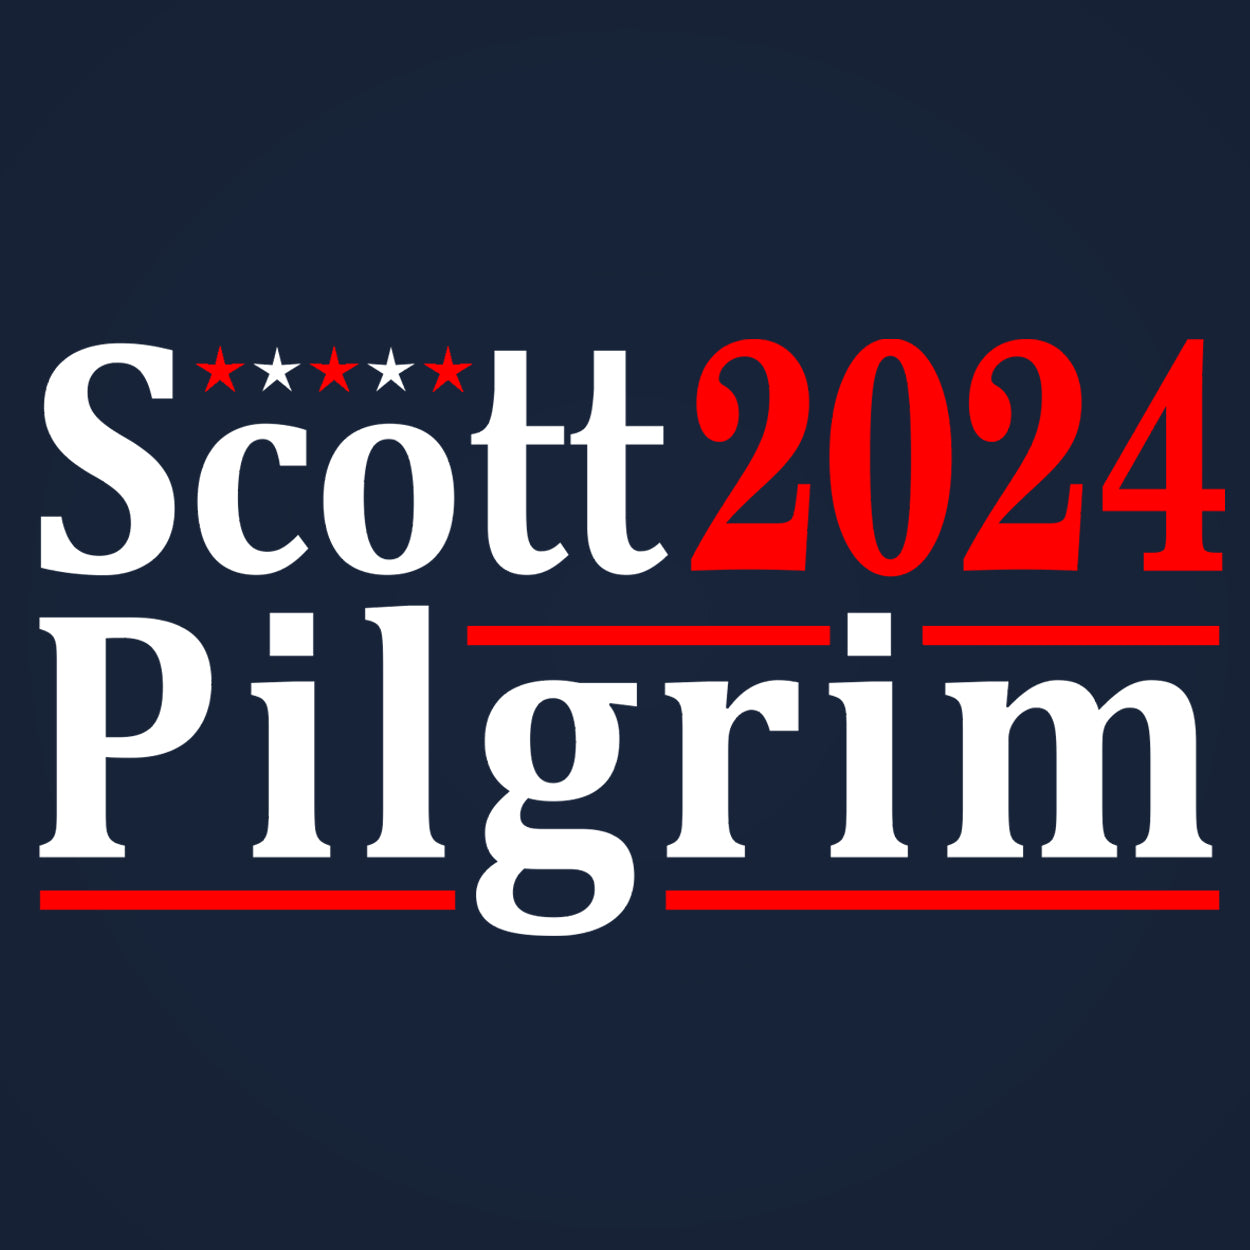 Scott Pilgrim 2024 Election Tshirt - Donkey Tees